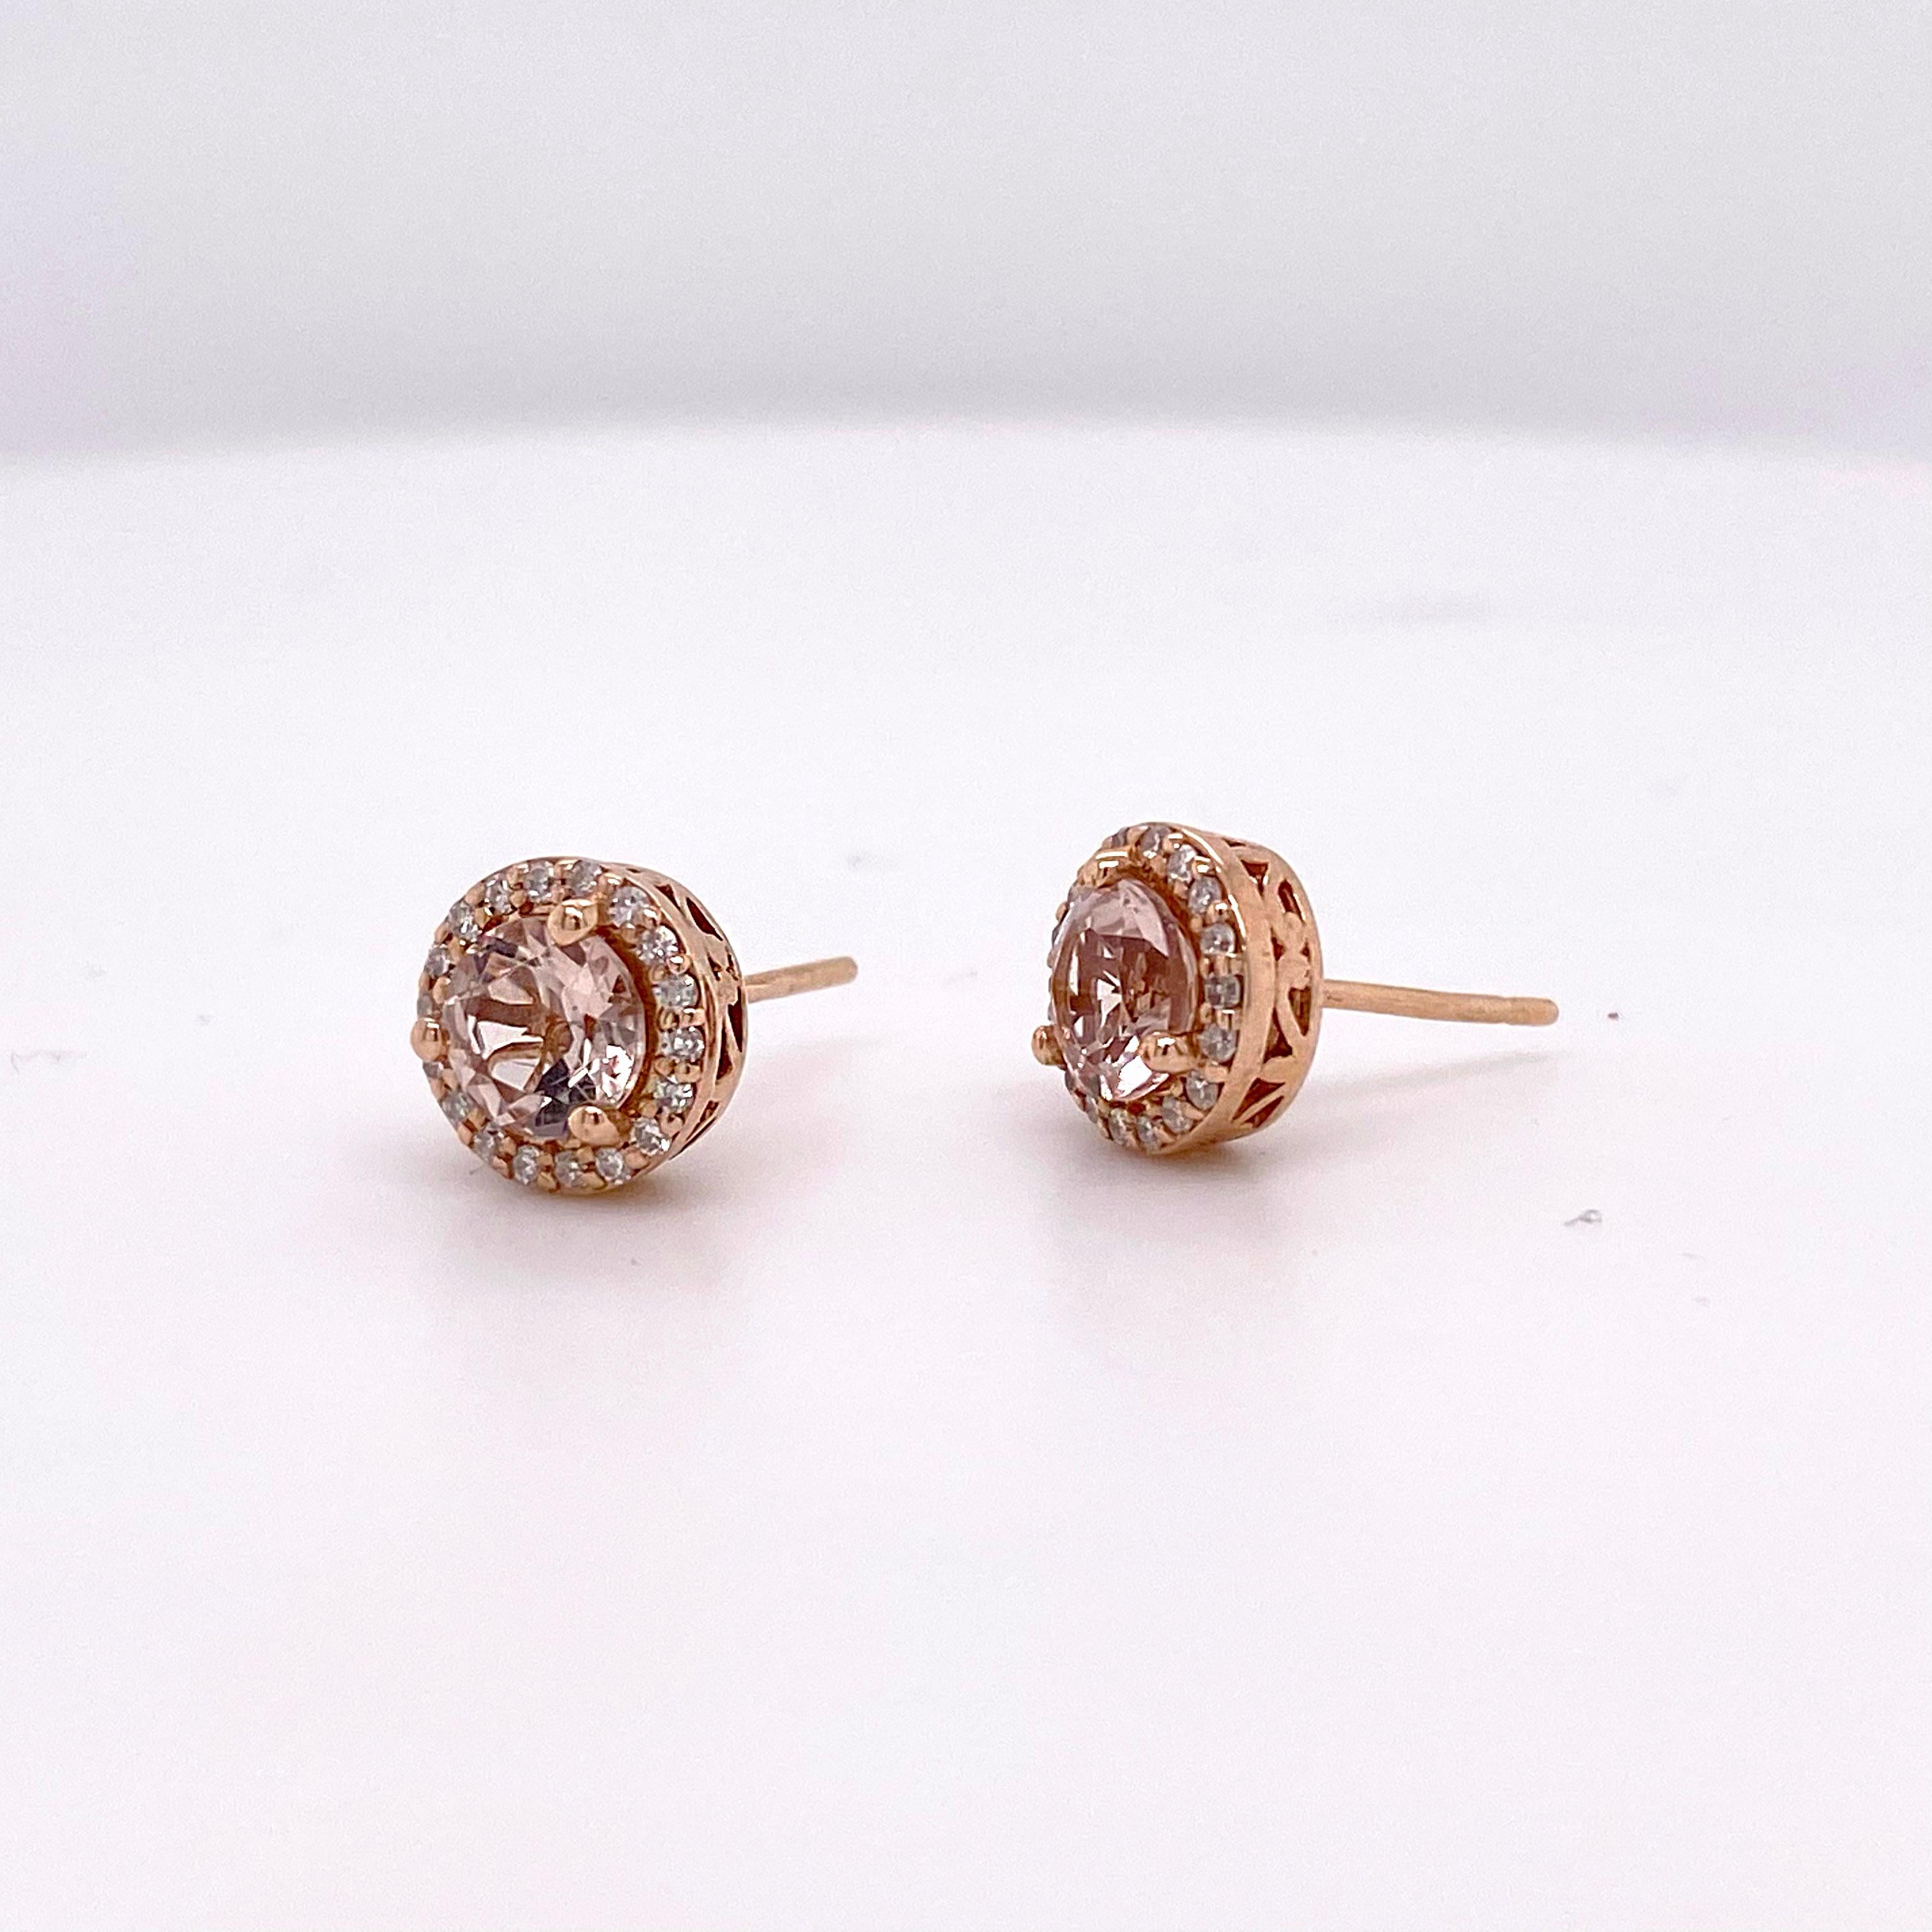 0.2 carat diamond earrings